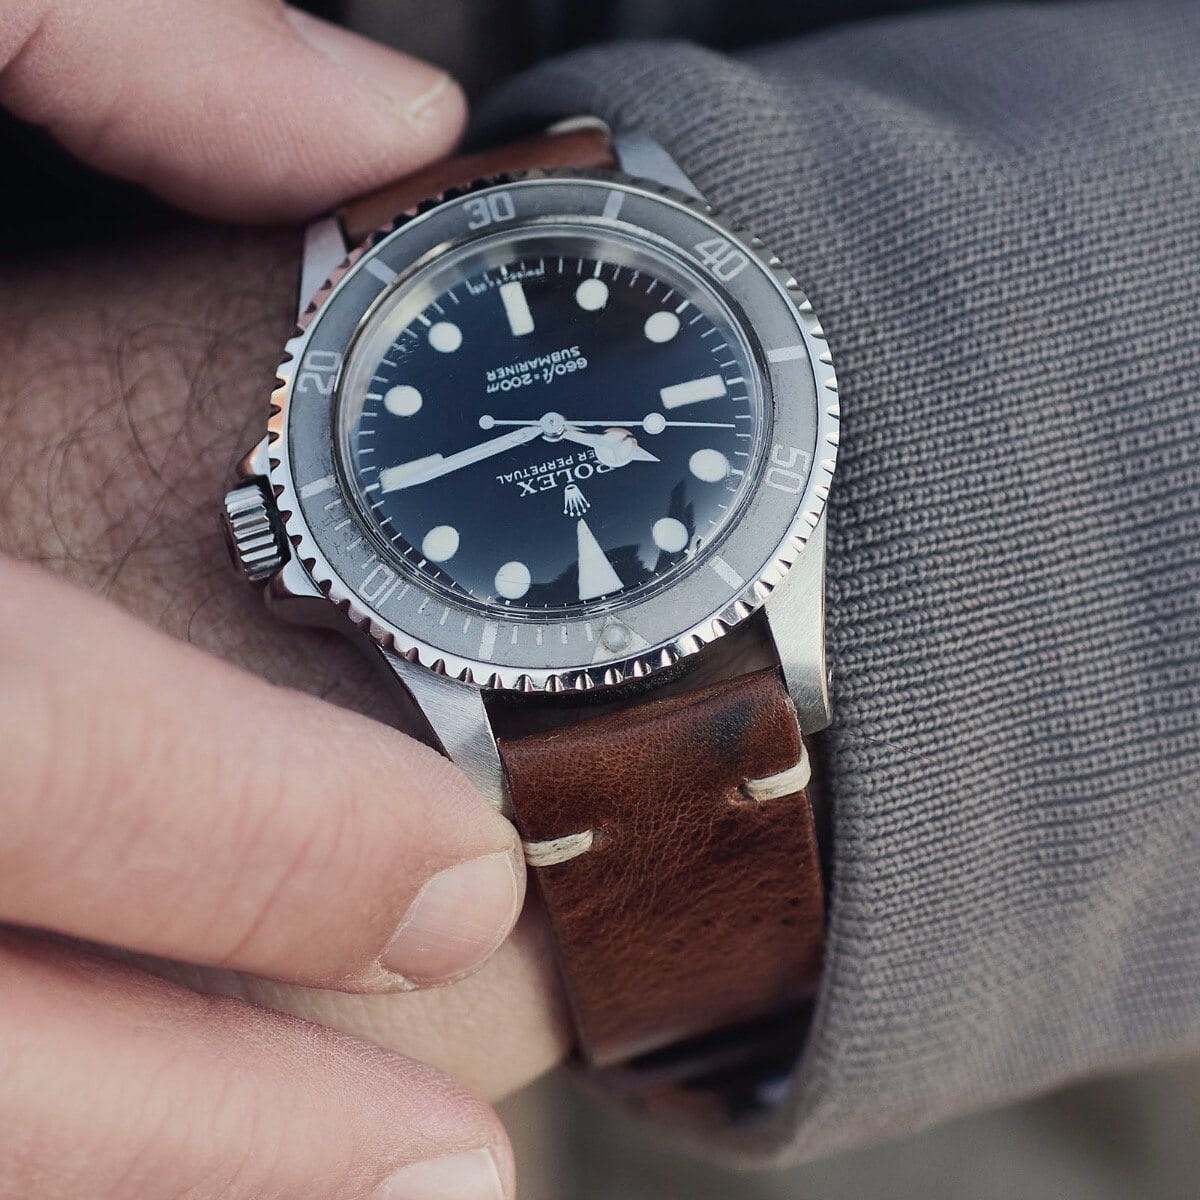 Siena Brown Leather Watch Strap on a Rolex 5513 Submariner